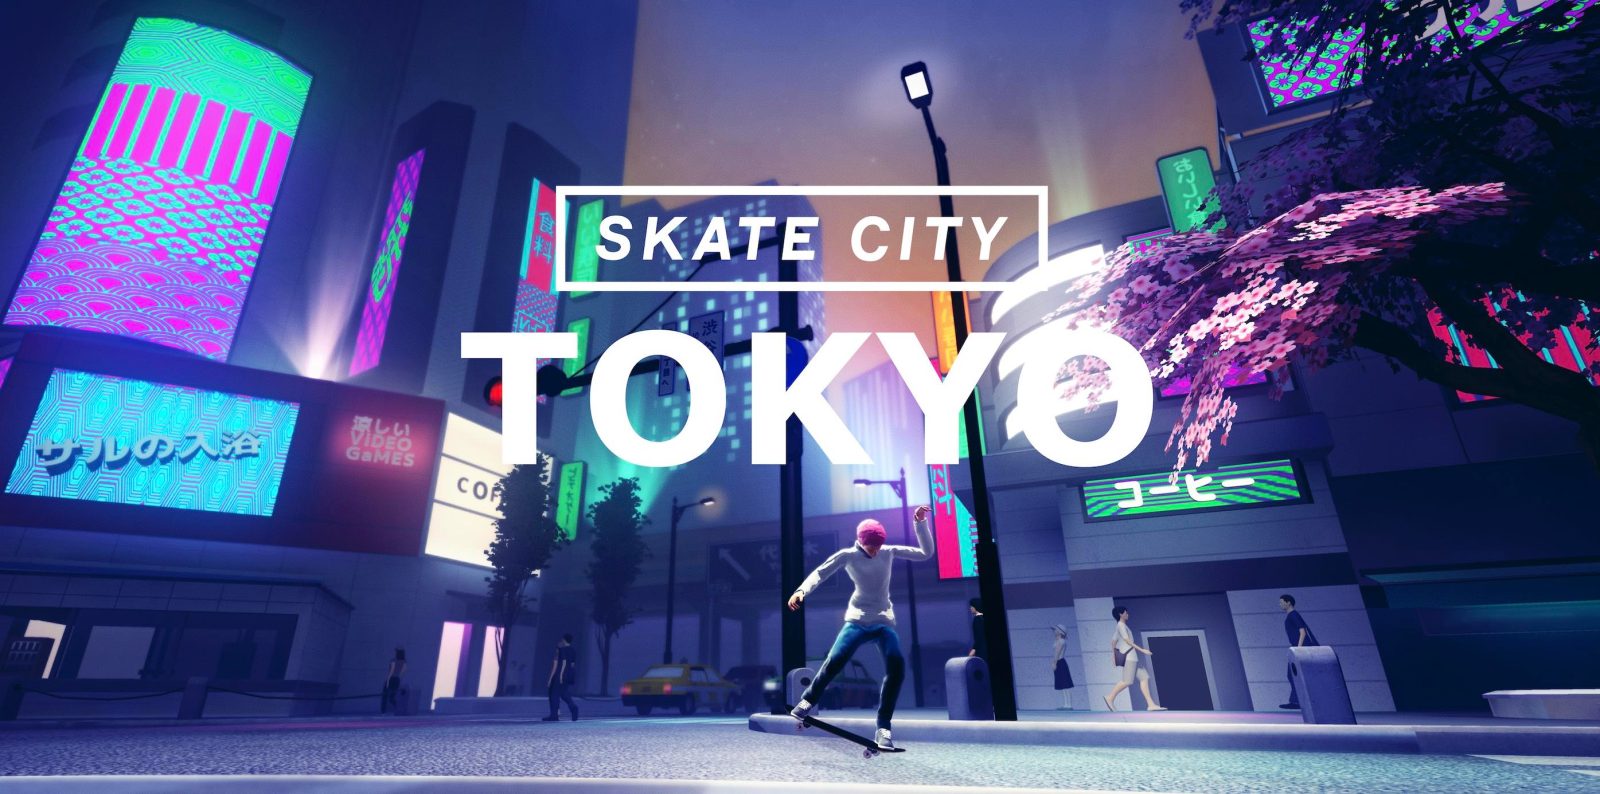 Apple Arcade Skate City. Skate City меню игры. Токио скейт.